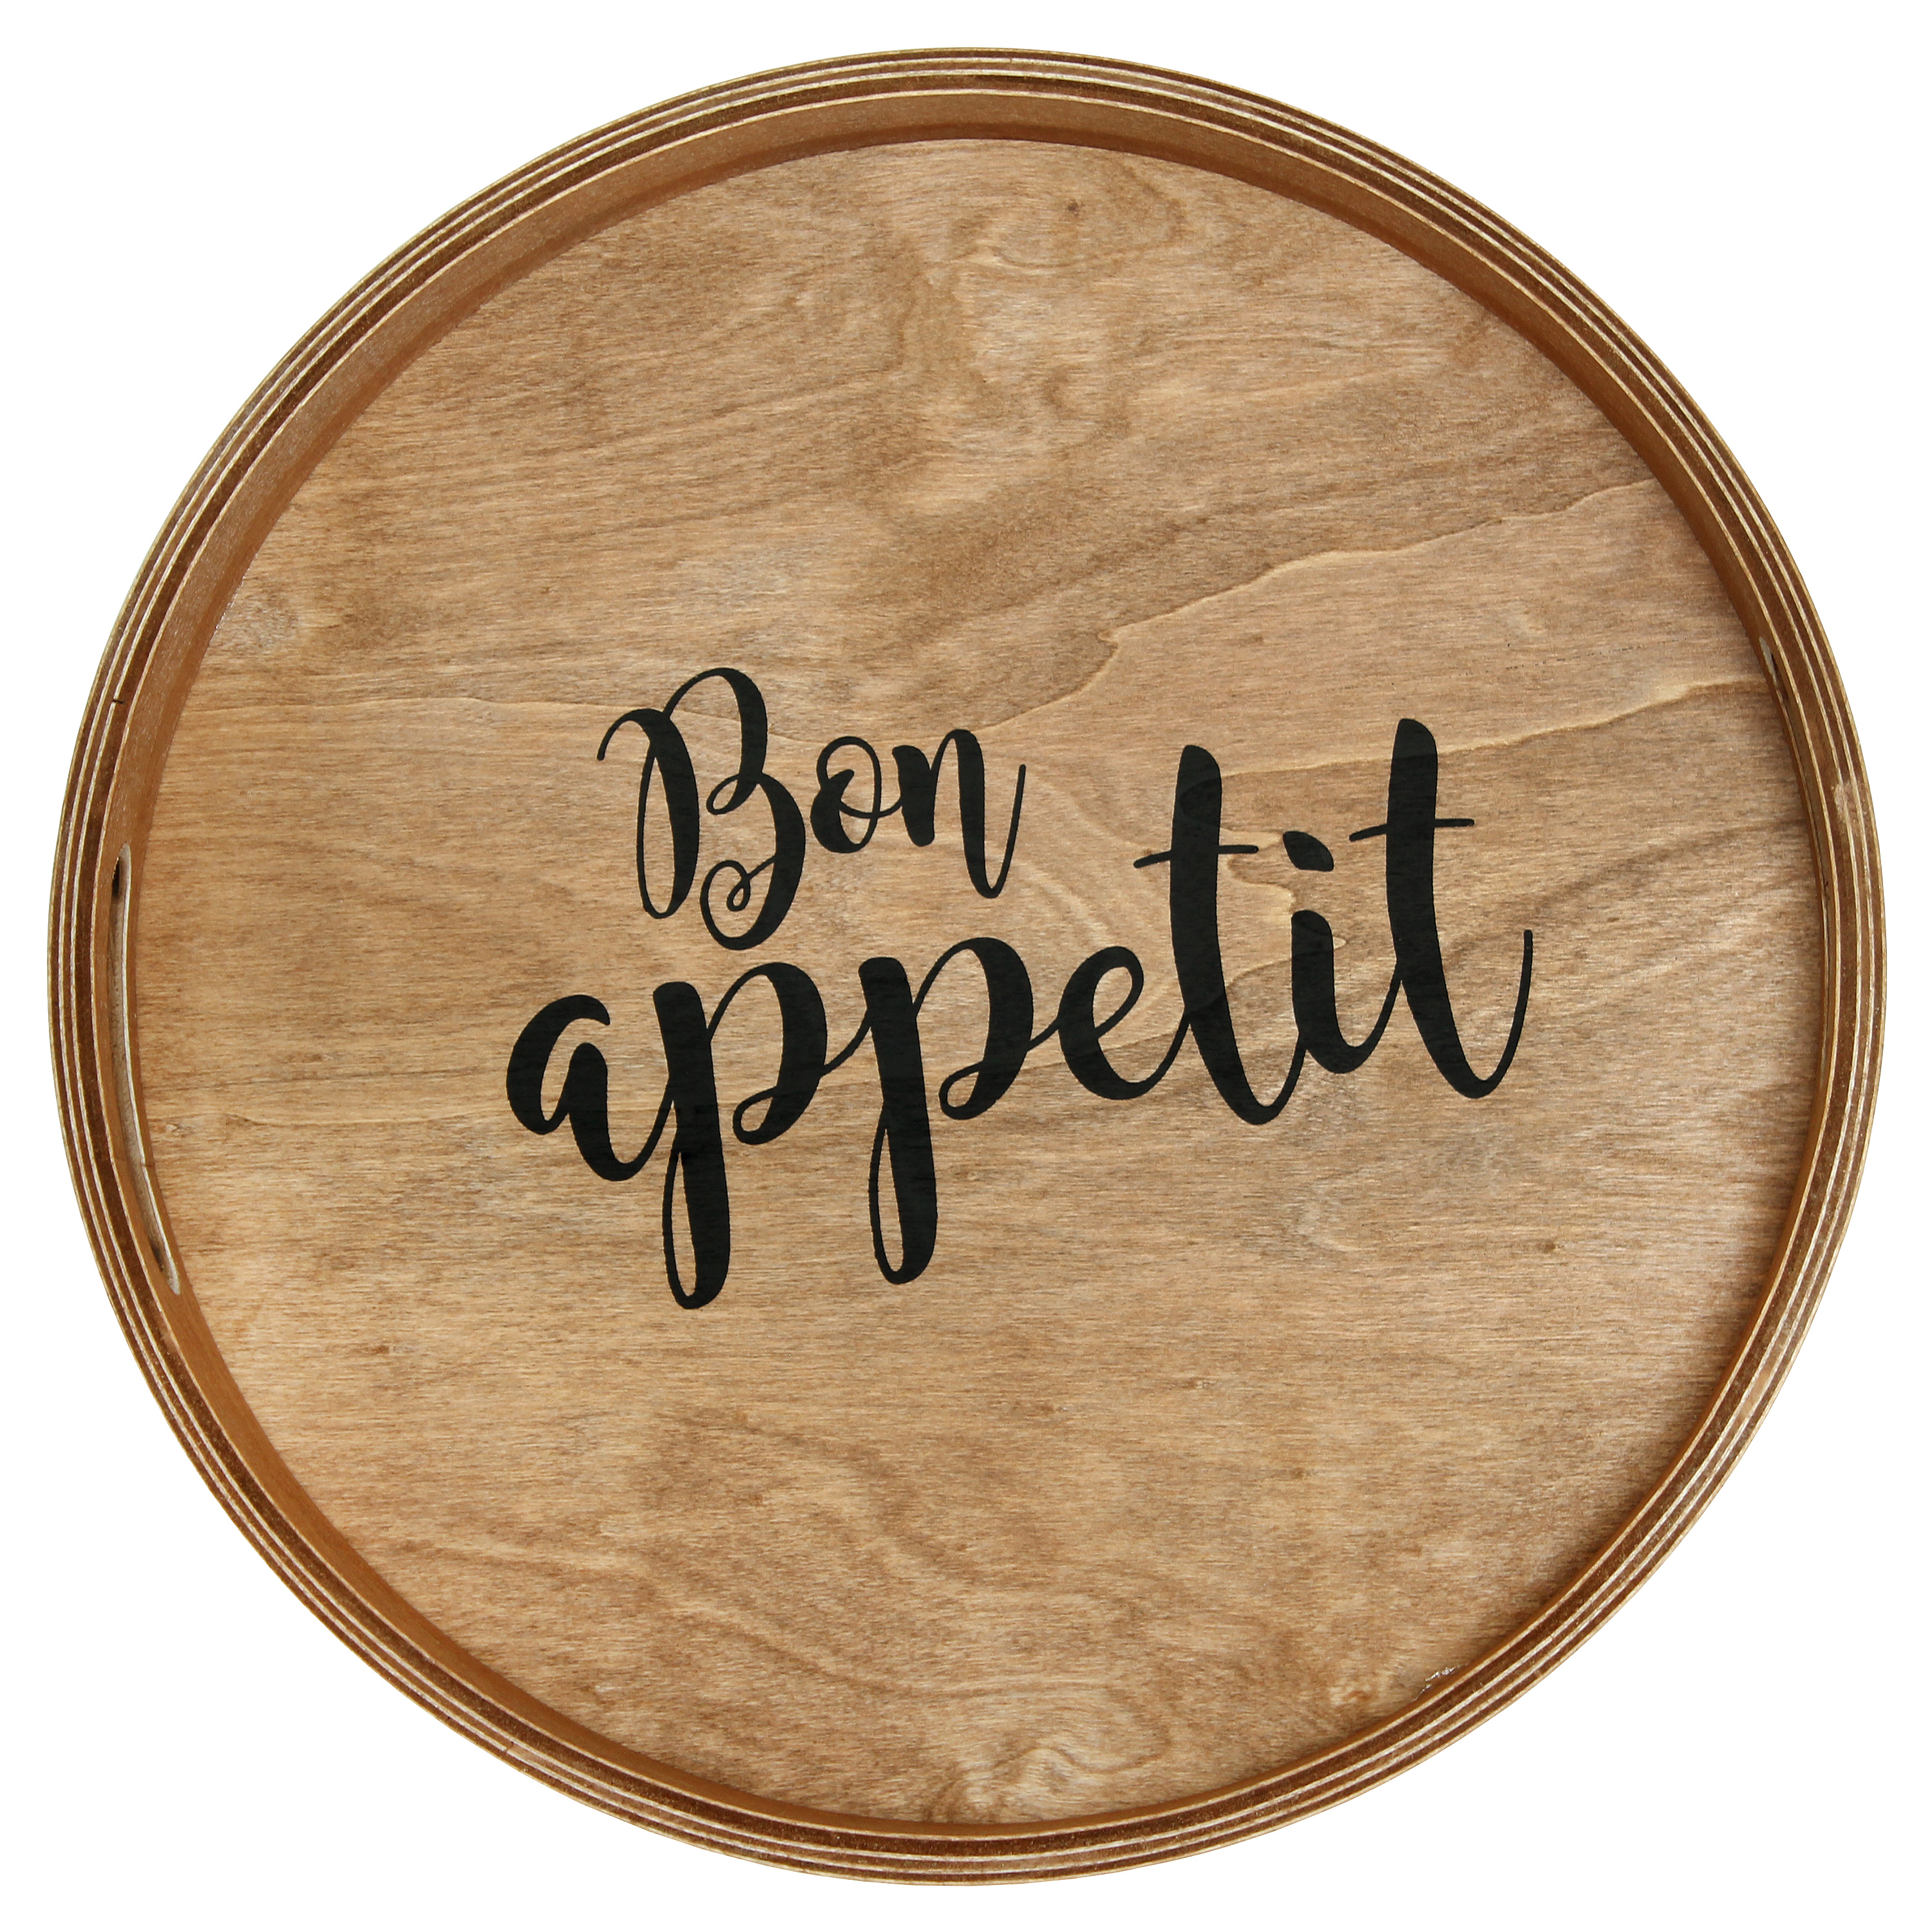 Elegant Designs Decorative 13.75" Round Wood Serving Tray w/ Handles, "Bon Appetit"